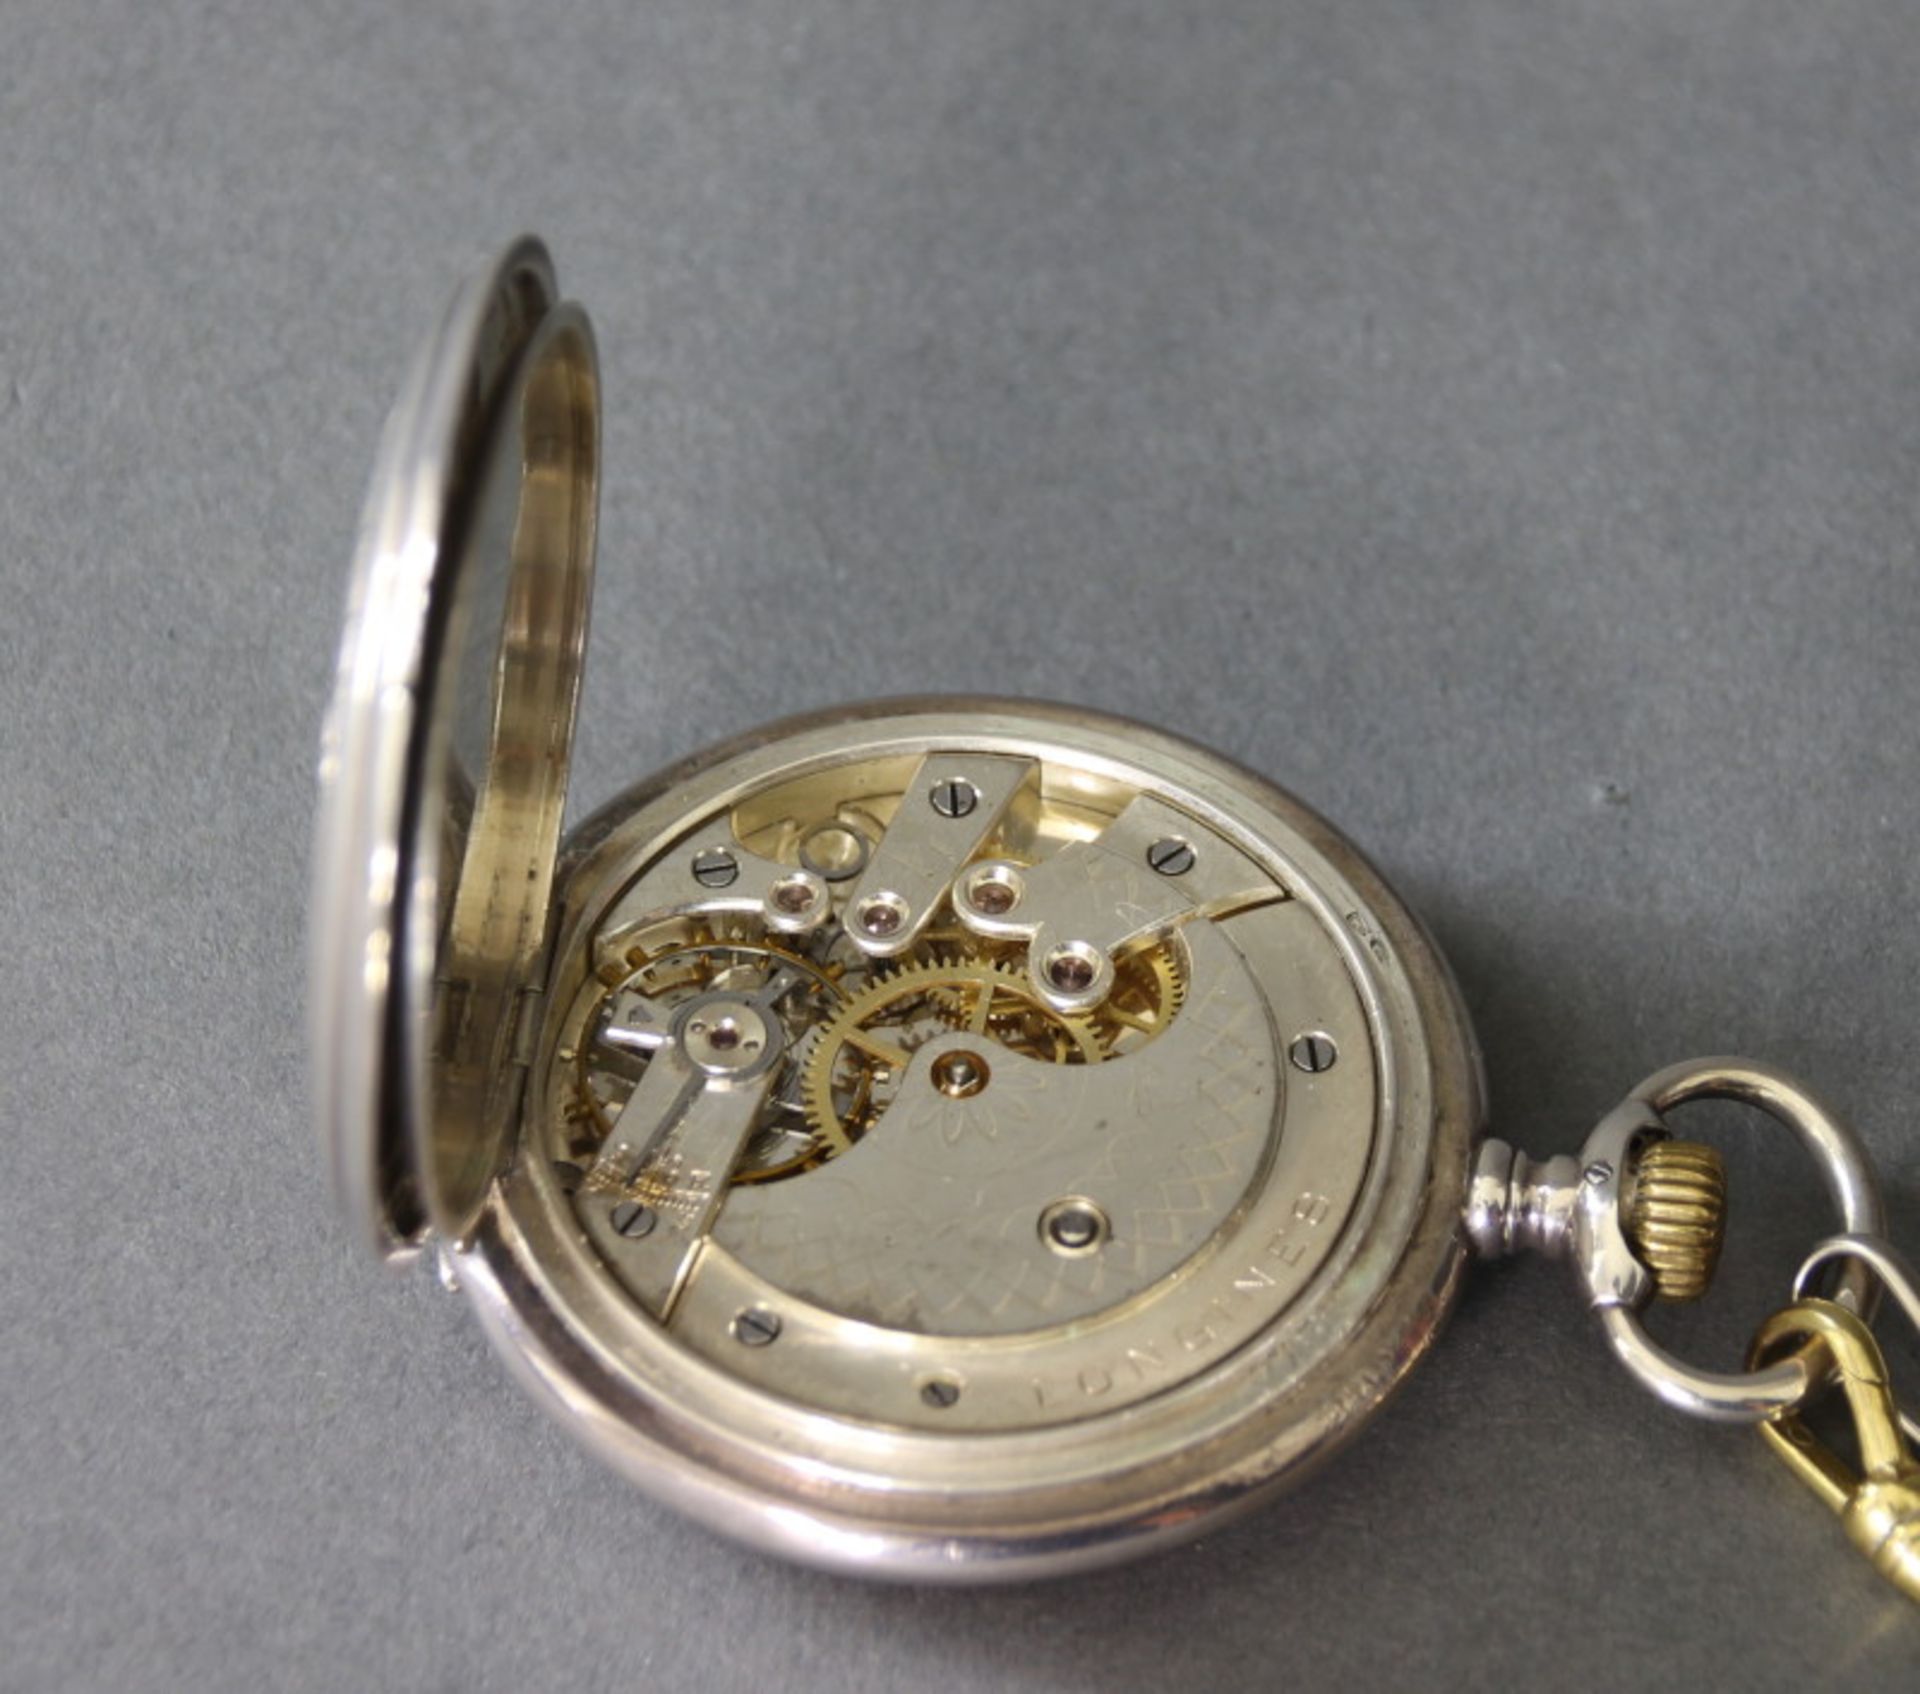 Herren-Taschenuhr, 900er Silber, "Longines", an versilberter Uhrenkette, um 1900 gravierte Deckel - Image 3 of 4